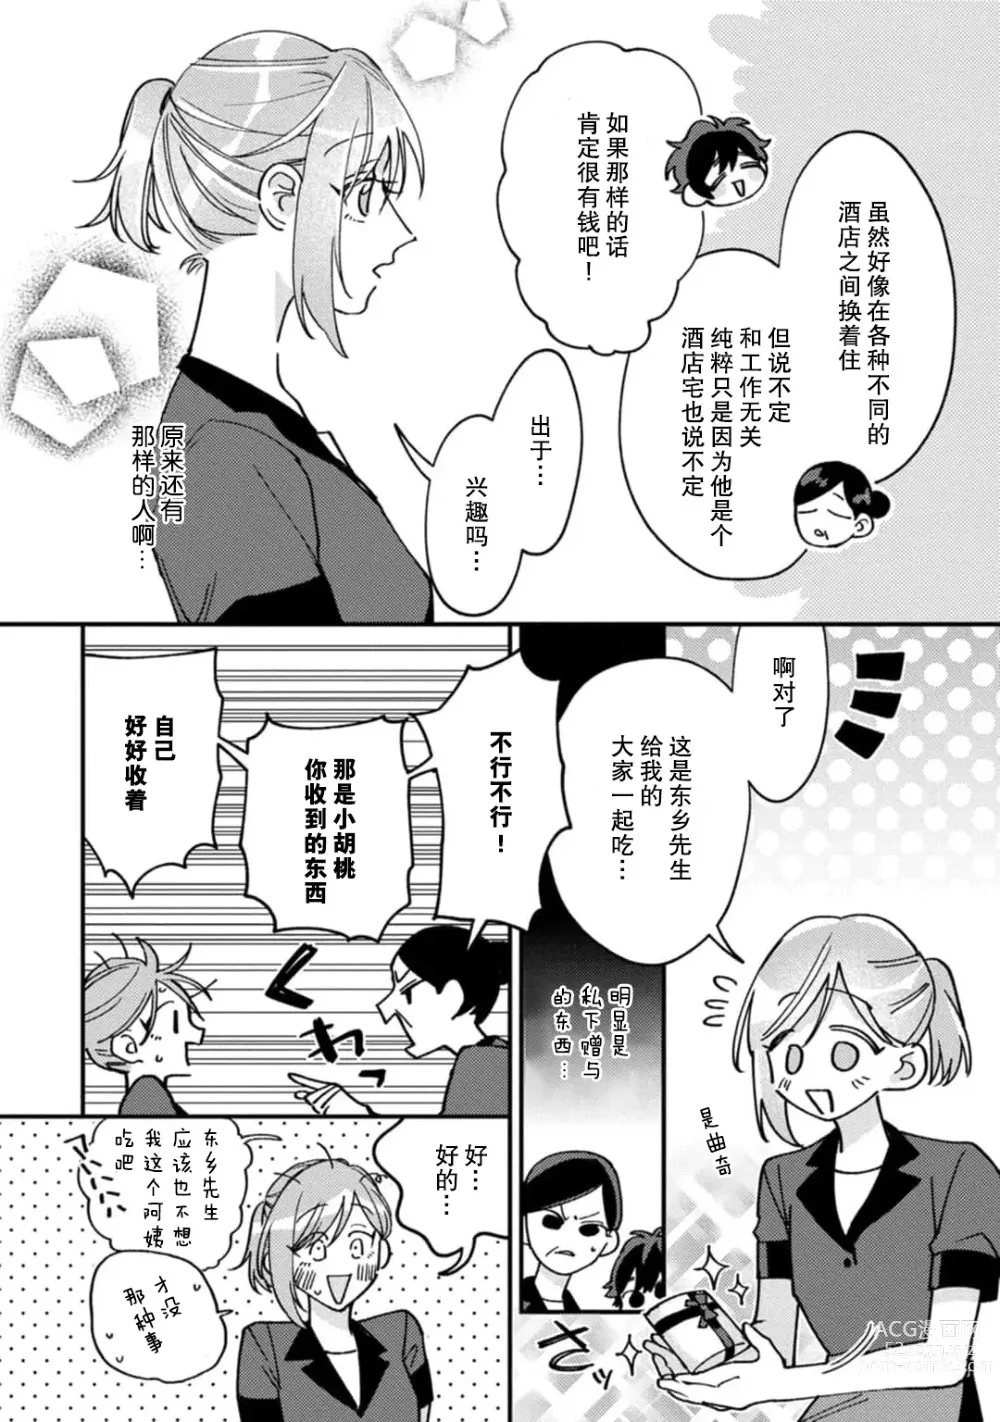 Page 18 of manga 请勿打扰！酒店客房服务员被常客绅士夺走第一次 1-3